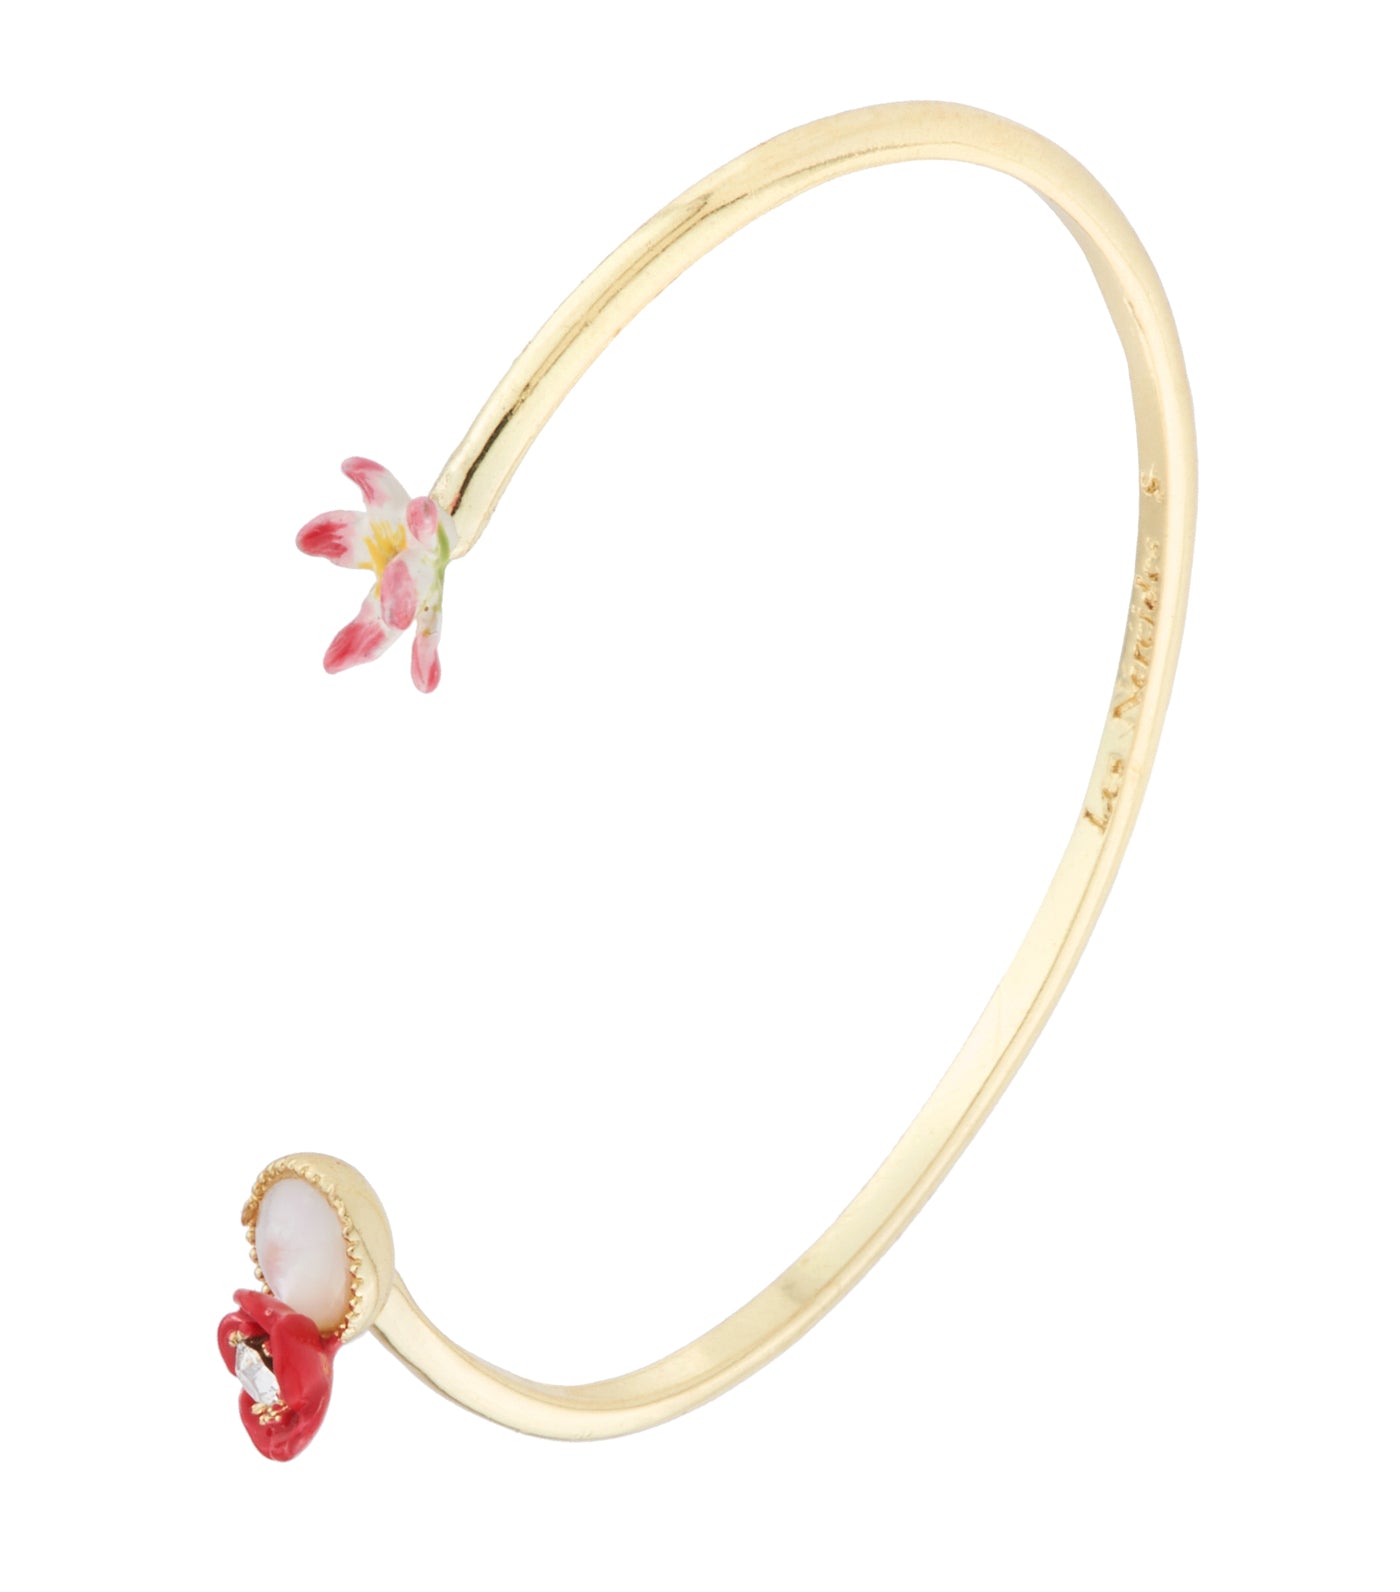 les néréides poppy, white flower and mother-of-pearl bangle bracelet